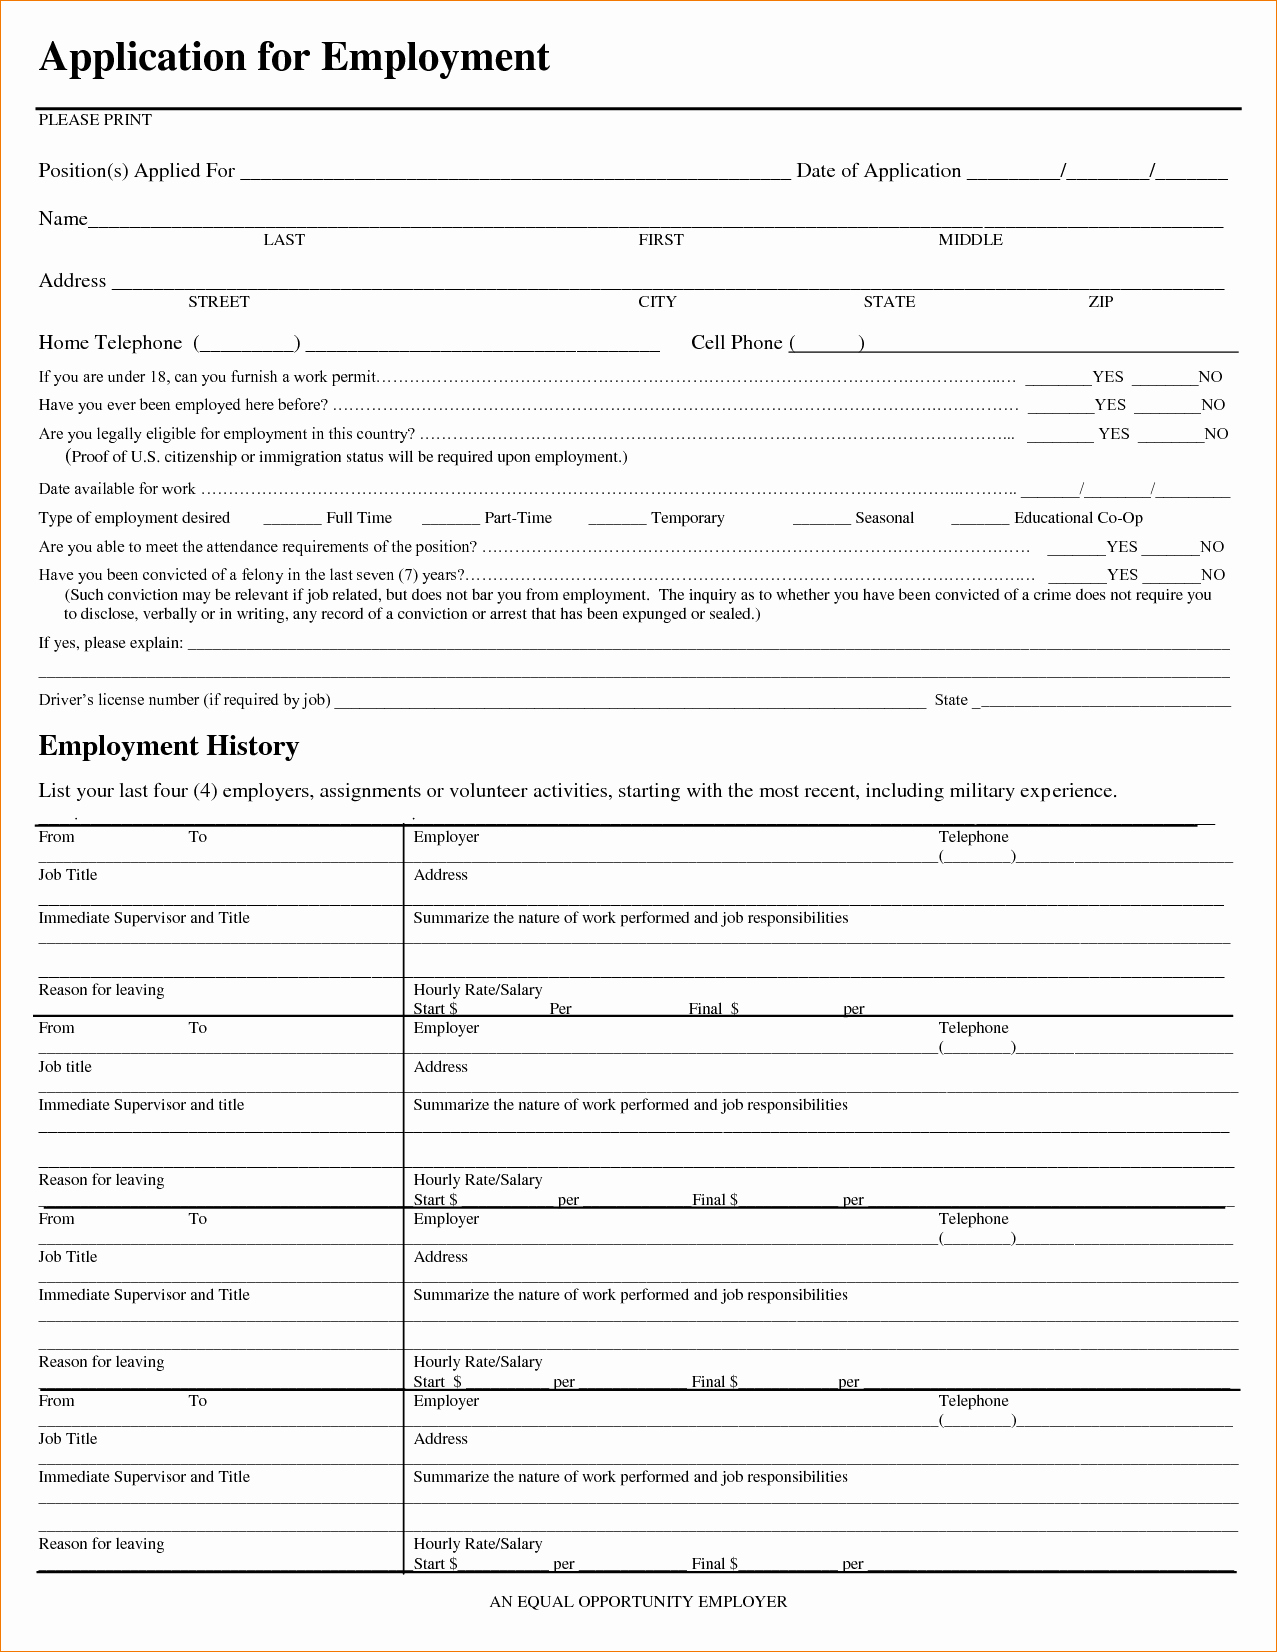 Application for Employment form Free Unique 11 Employment Application form Freeagenda Template Sample